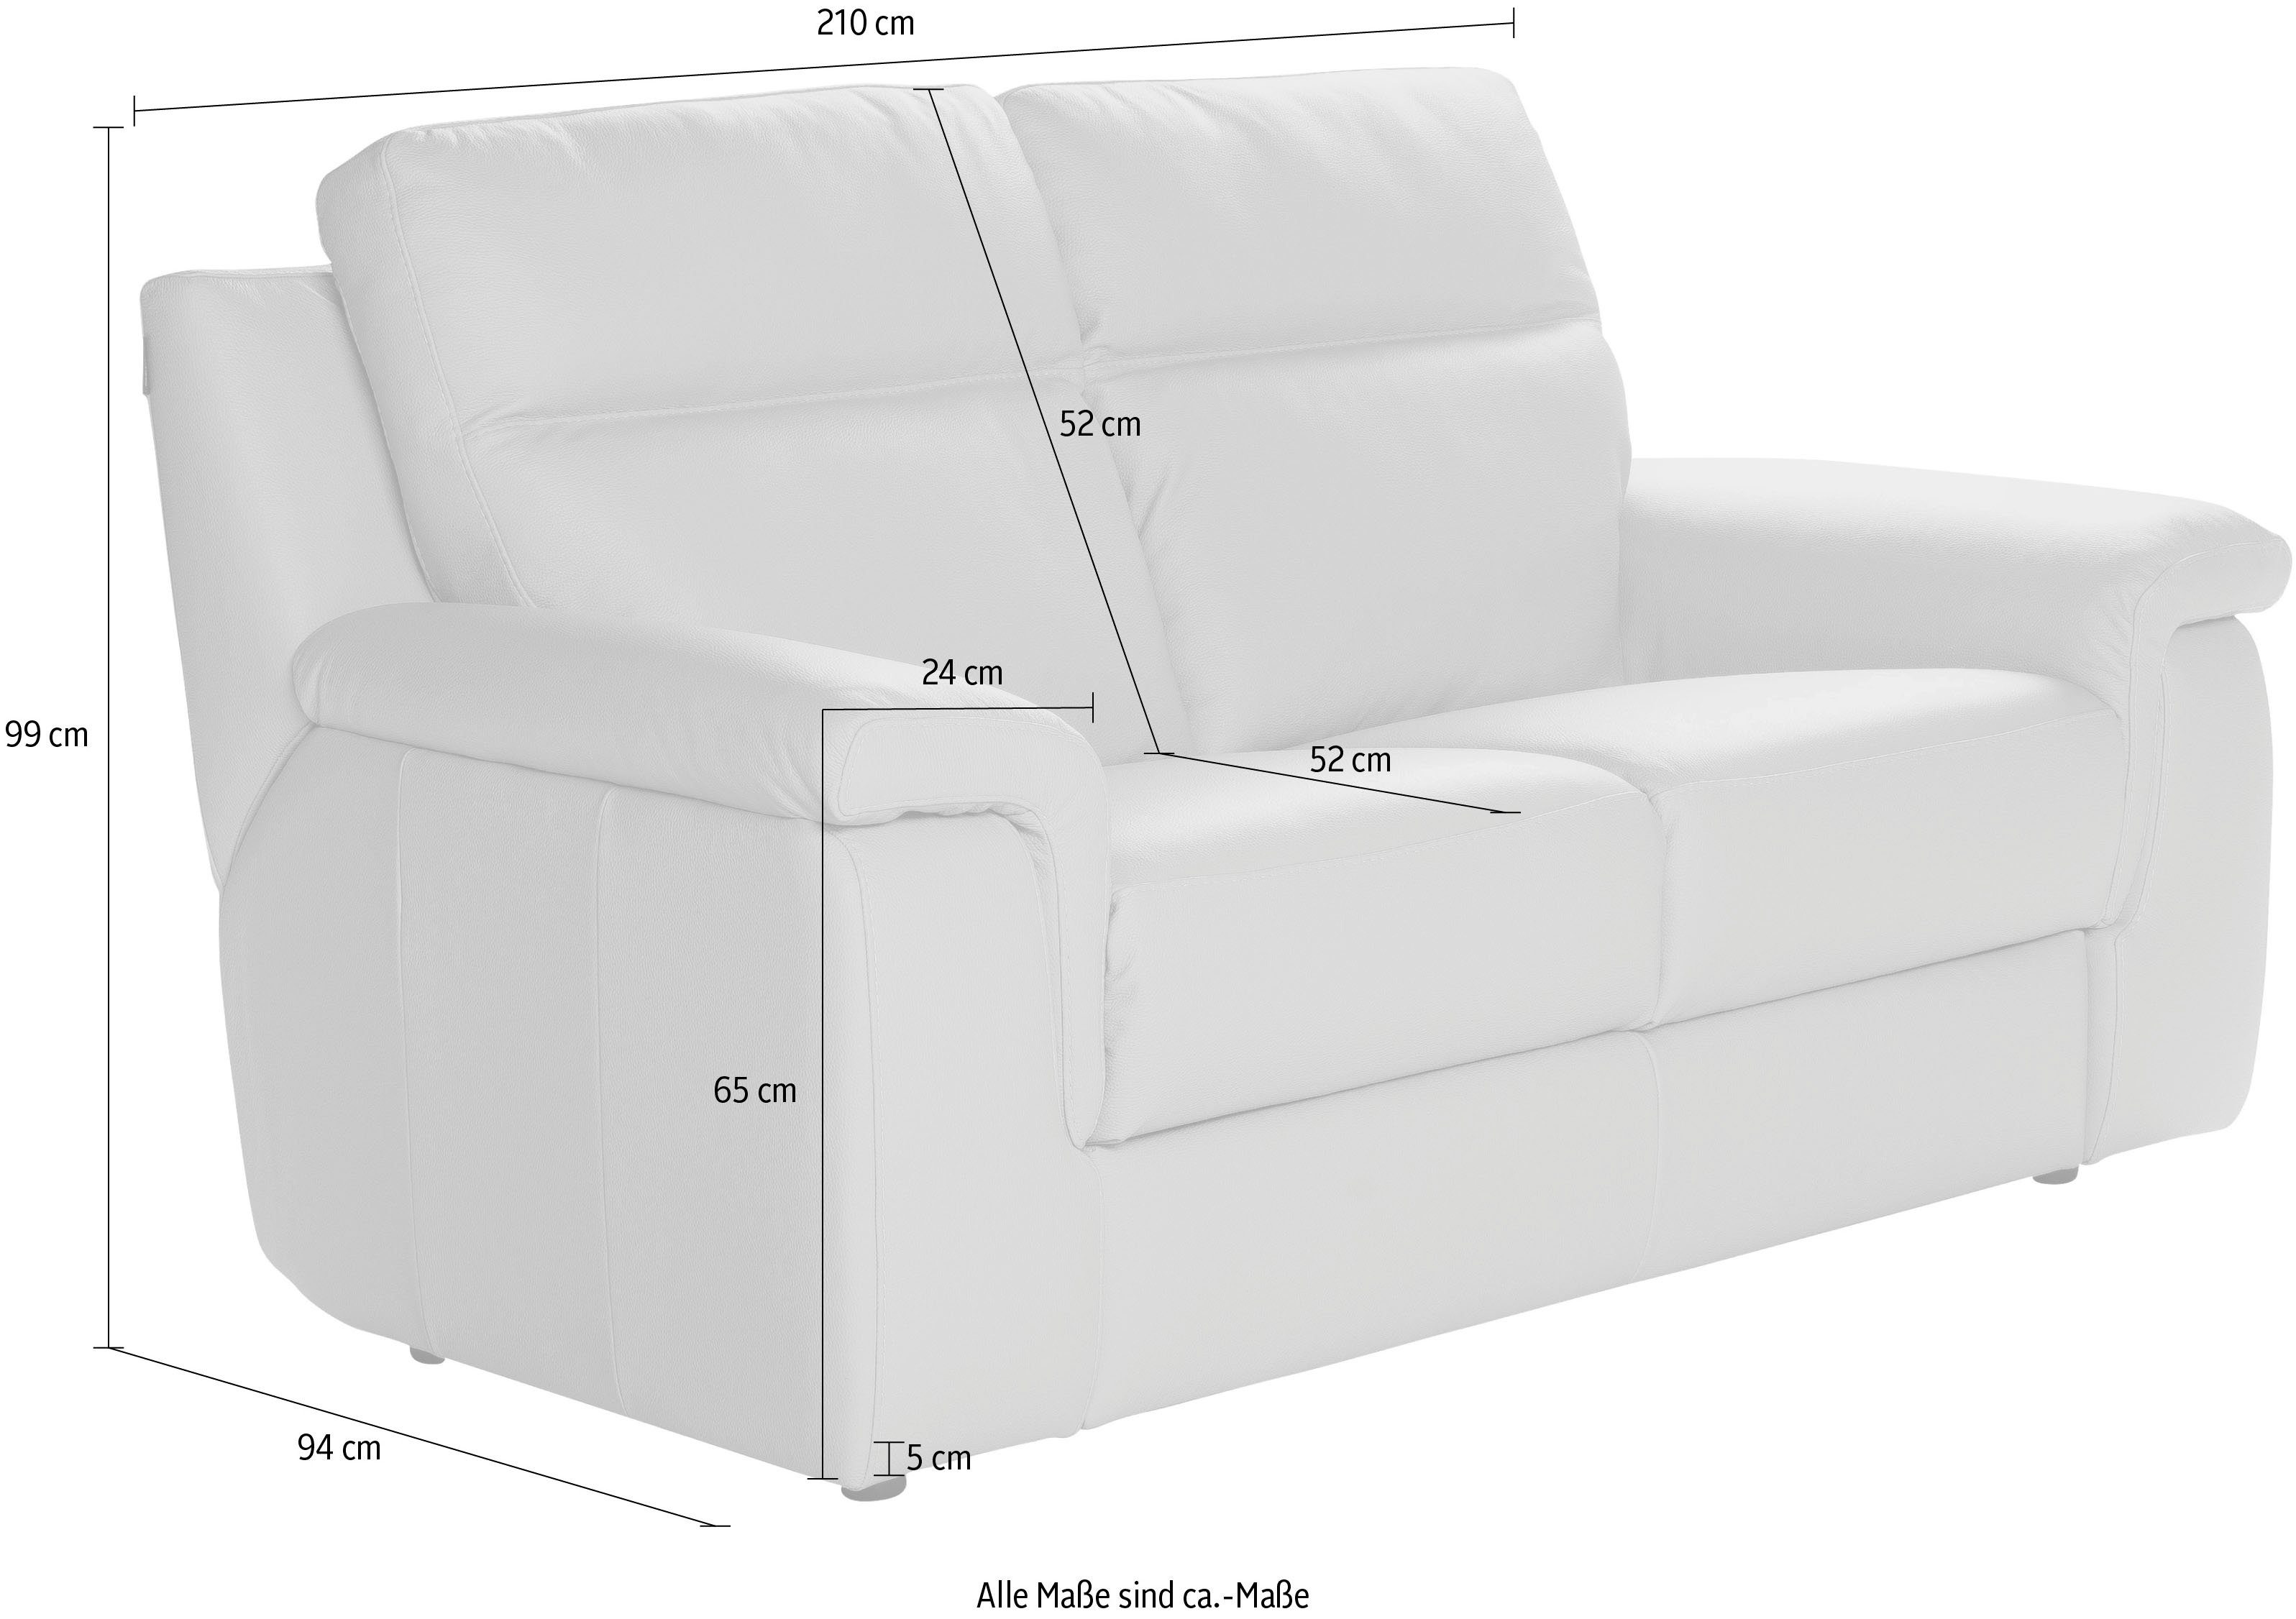 Nicoletti Home Breite 3-Sitzer mit Alan, 210 Relaxfunktion cm, wahlweise